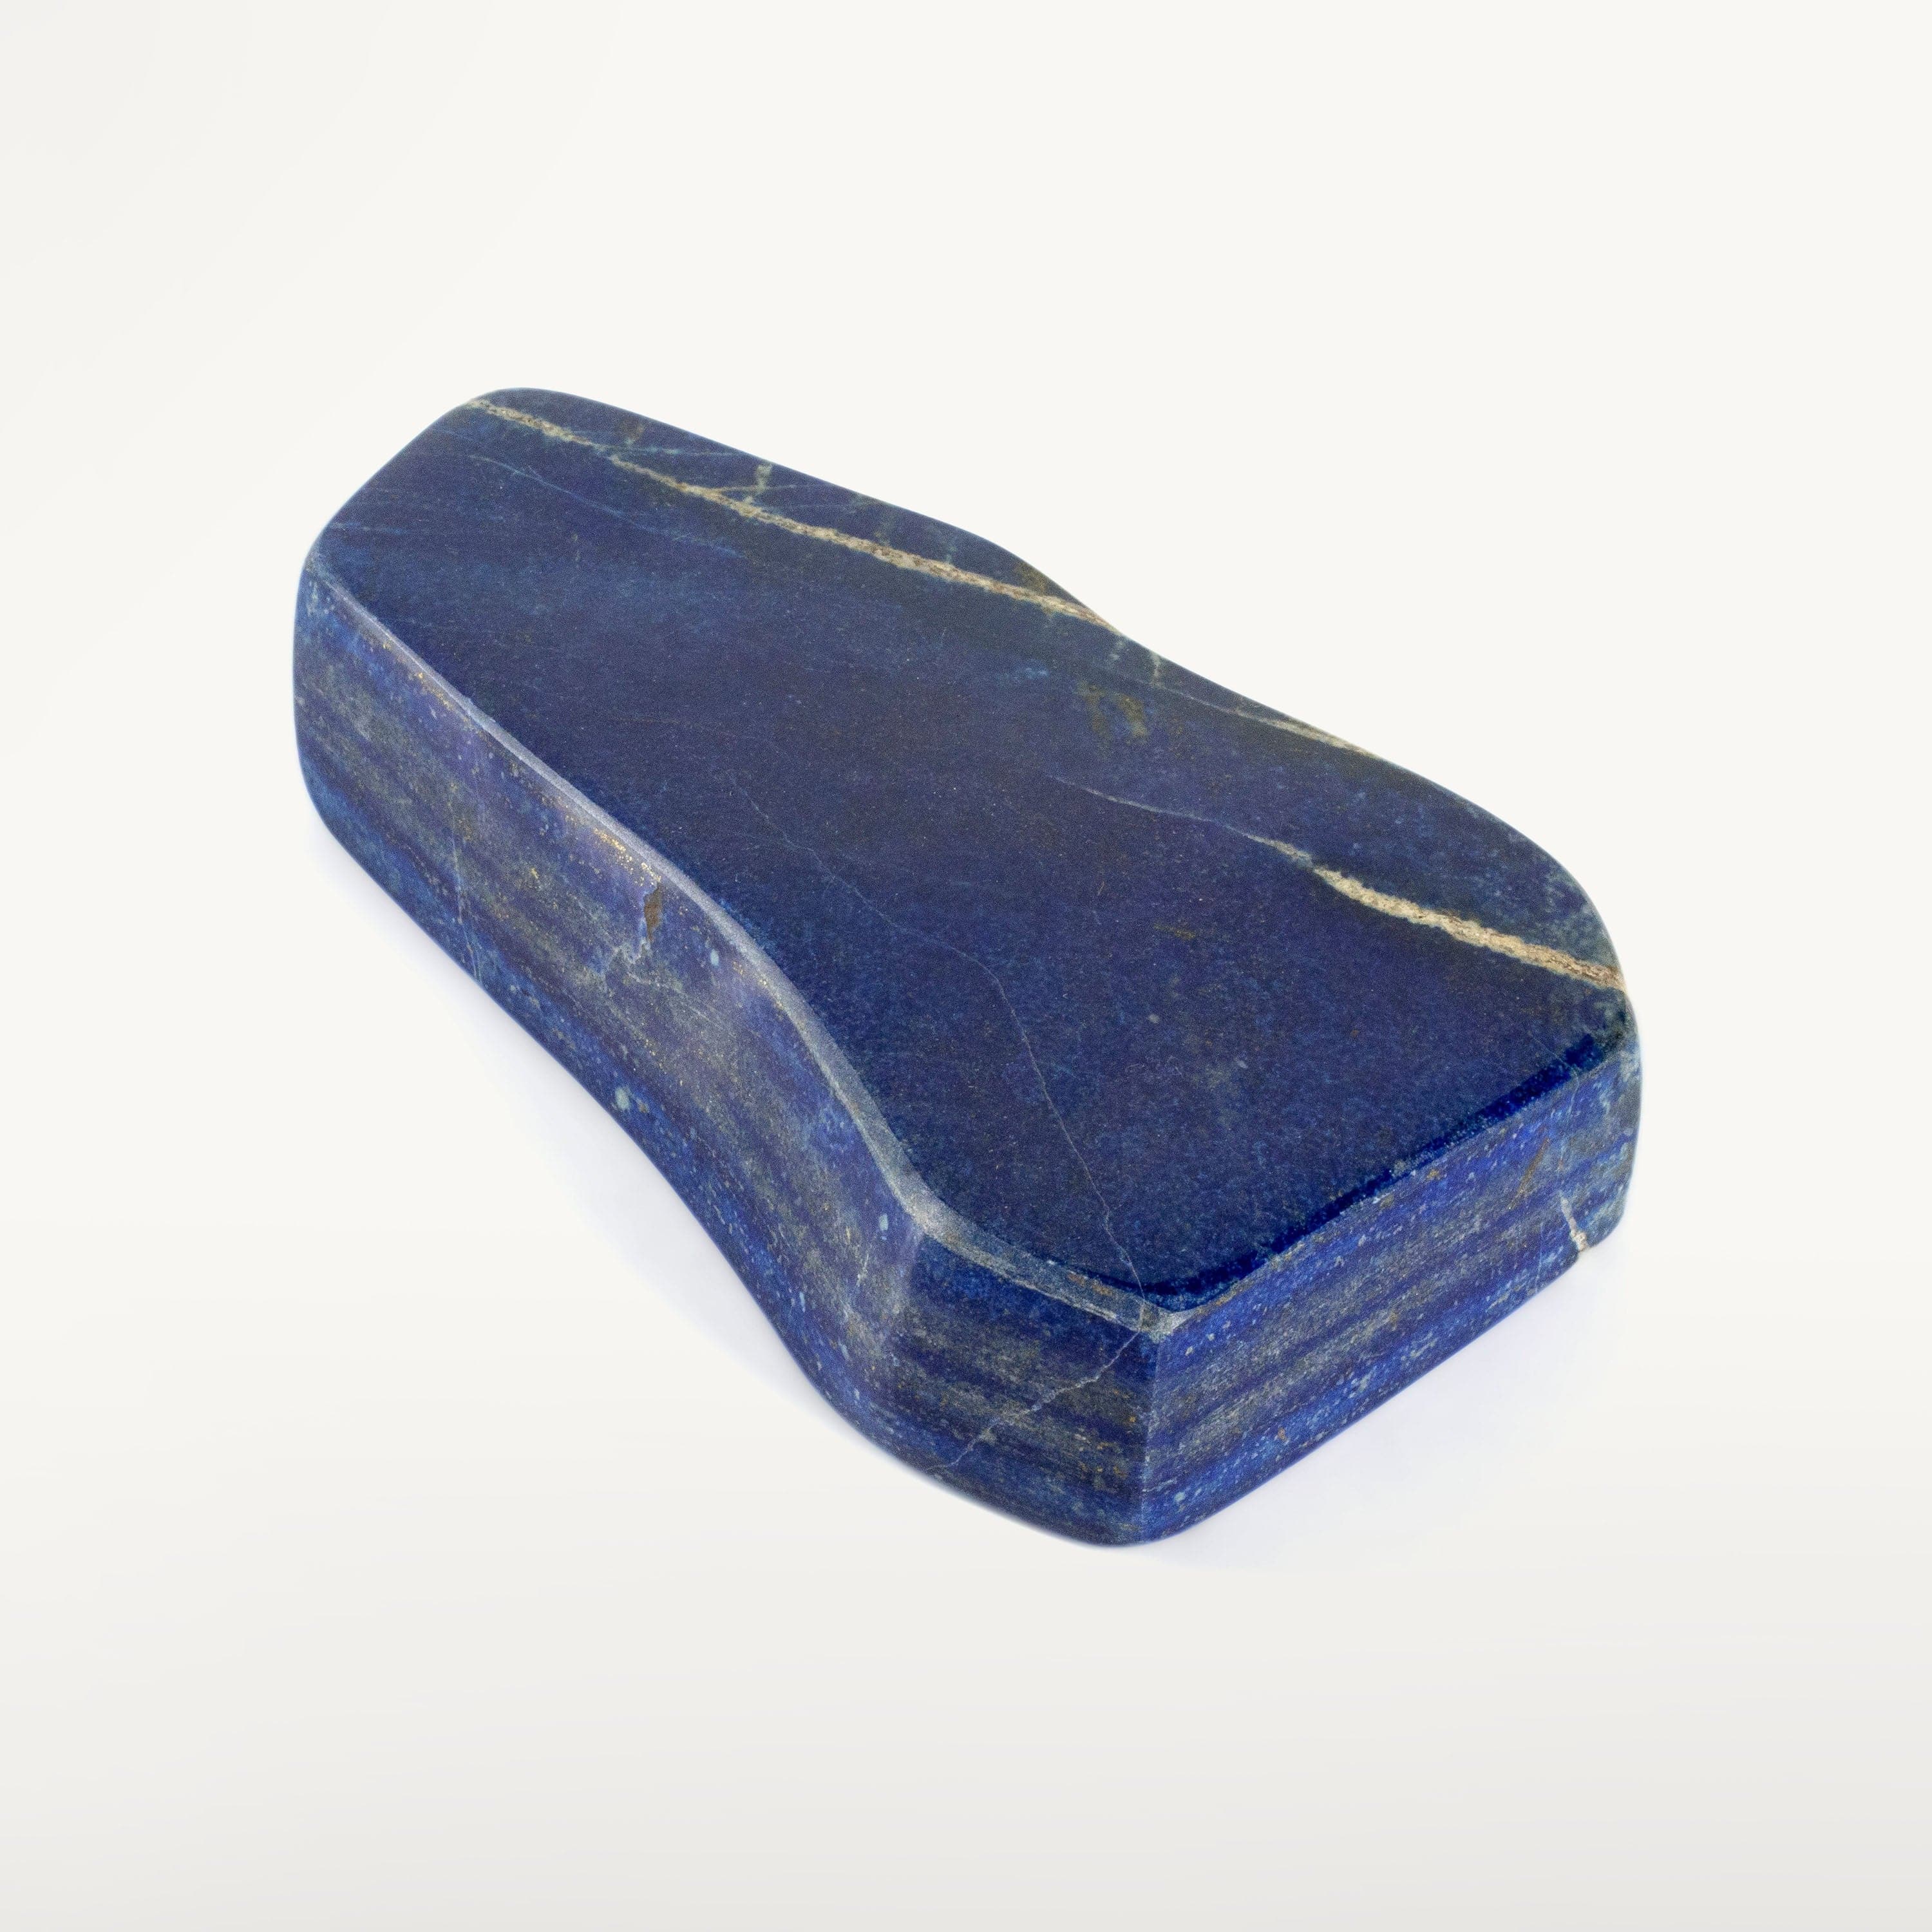 Kalifano Lapis Lapis Lazuli Freeform from Afghanistan - 6.5" / 1,160 grams LP1200.004